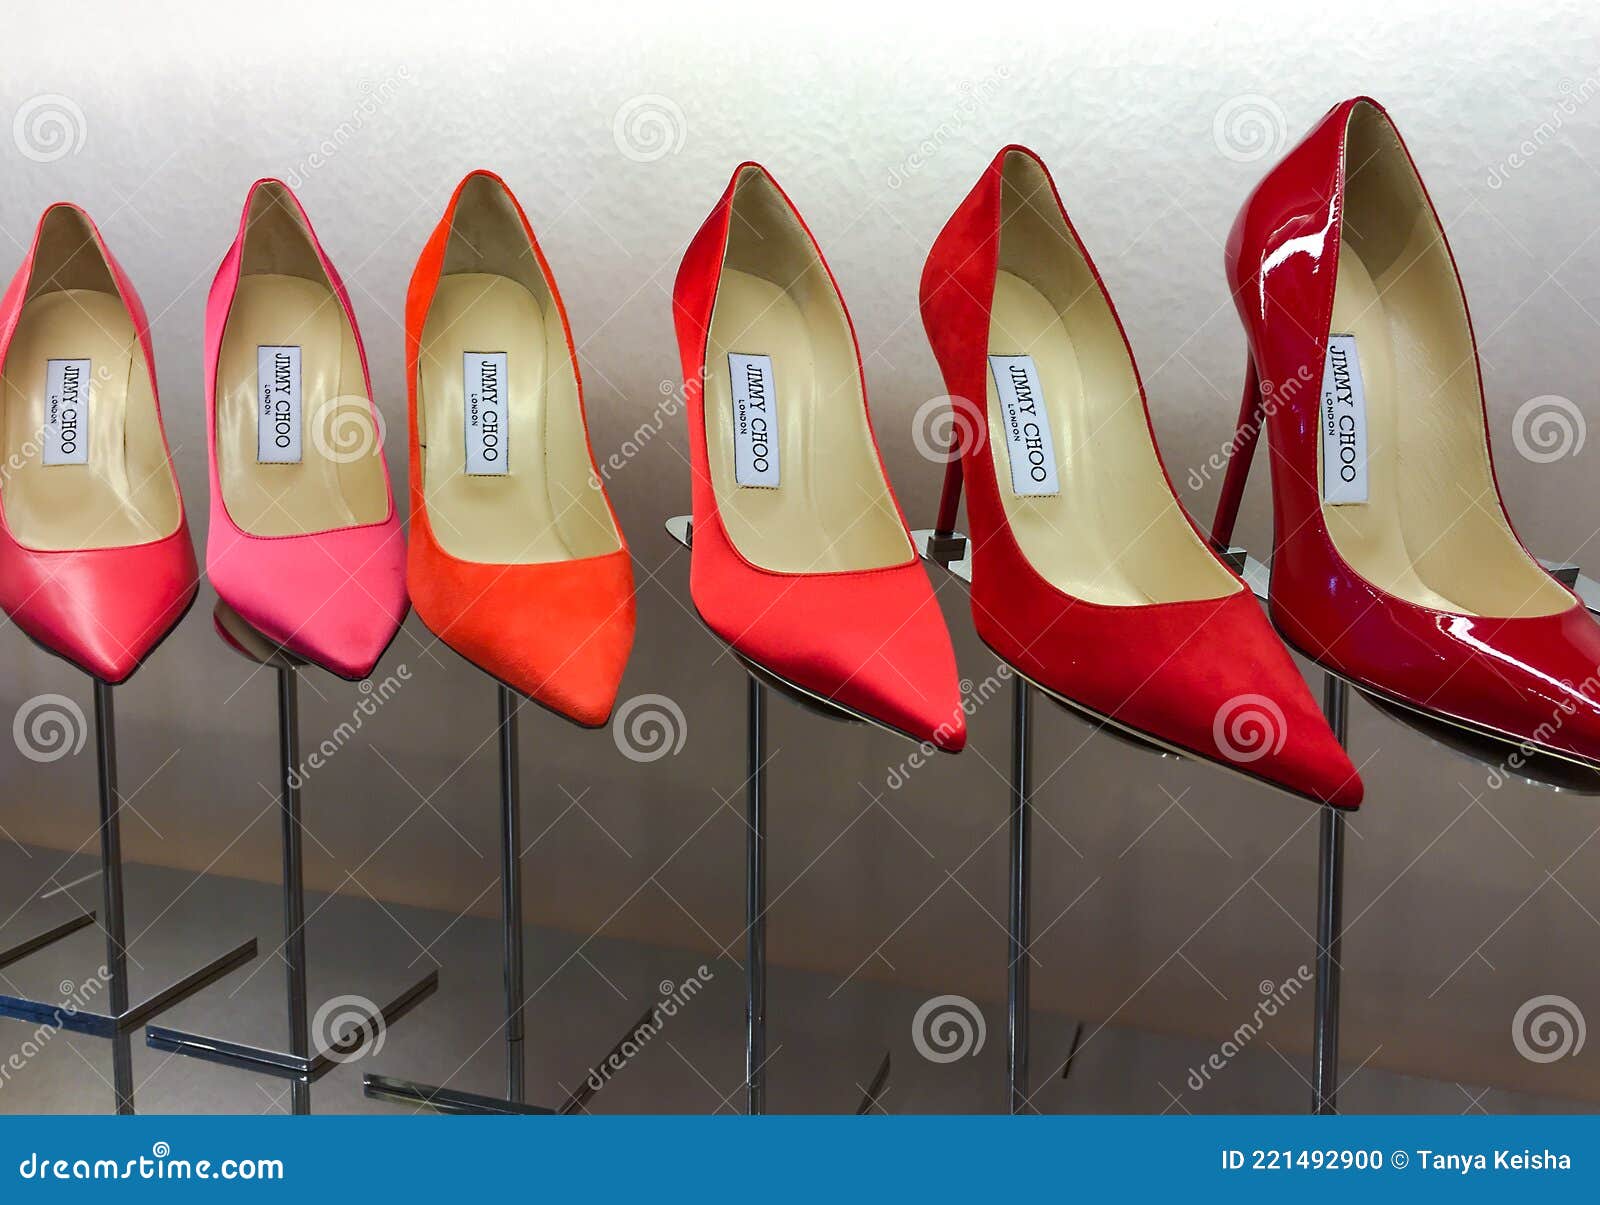 Jimmy Choo Women's Red Shoes